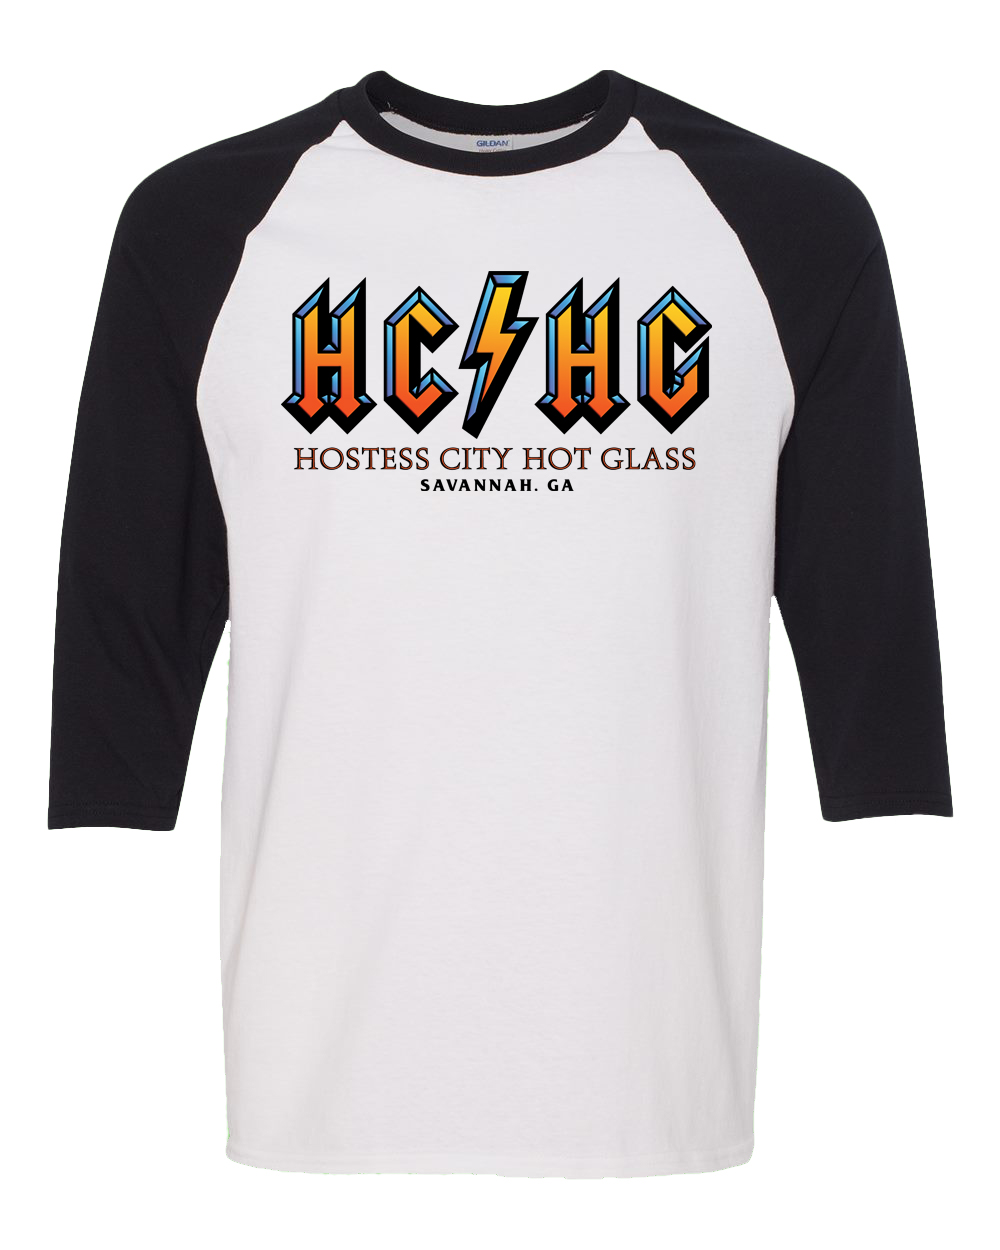 Hostess City Hot Glass “HC/HG” unisex 3/4 sleeve Raglan